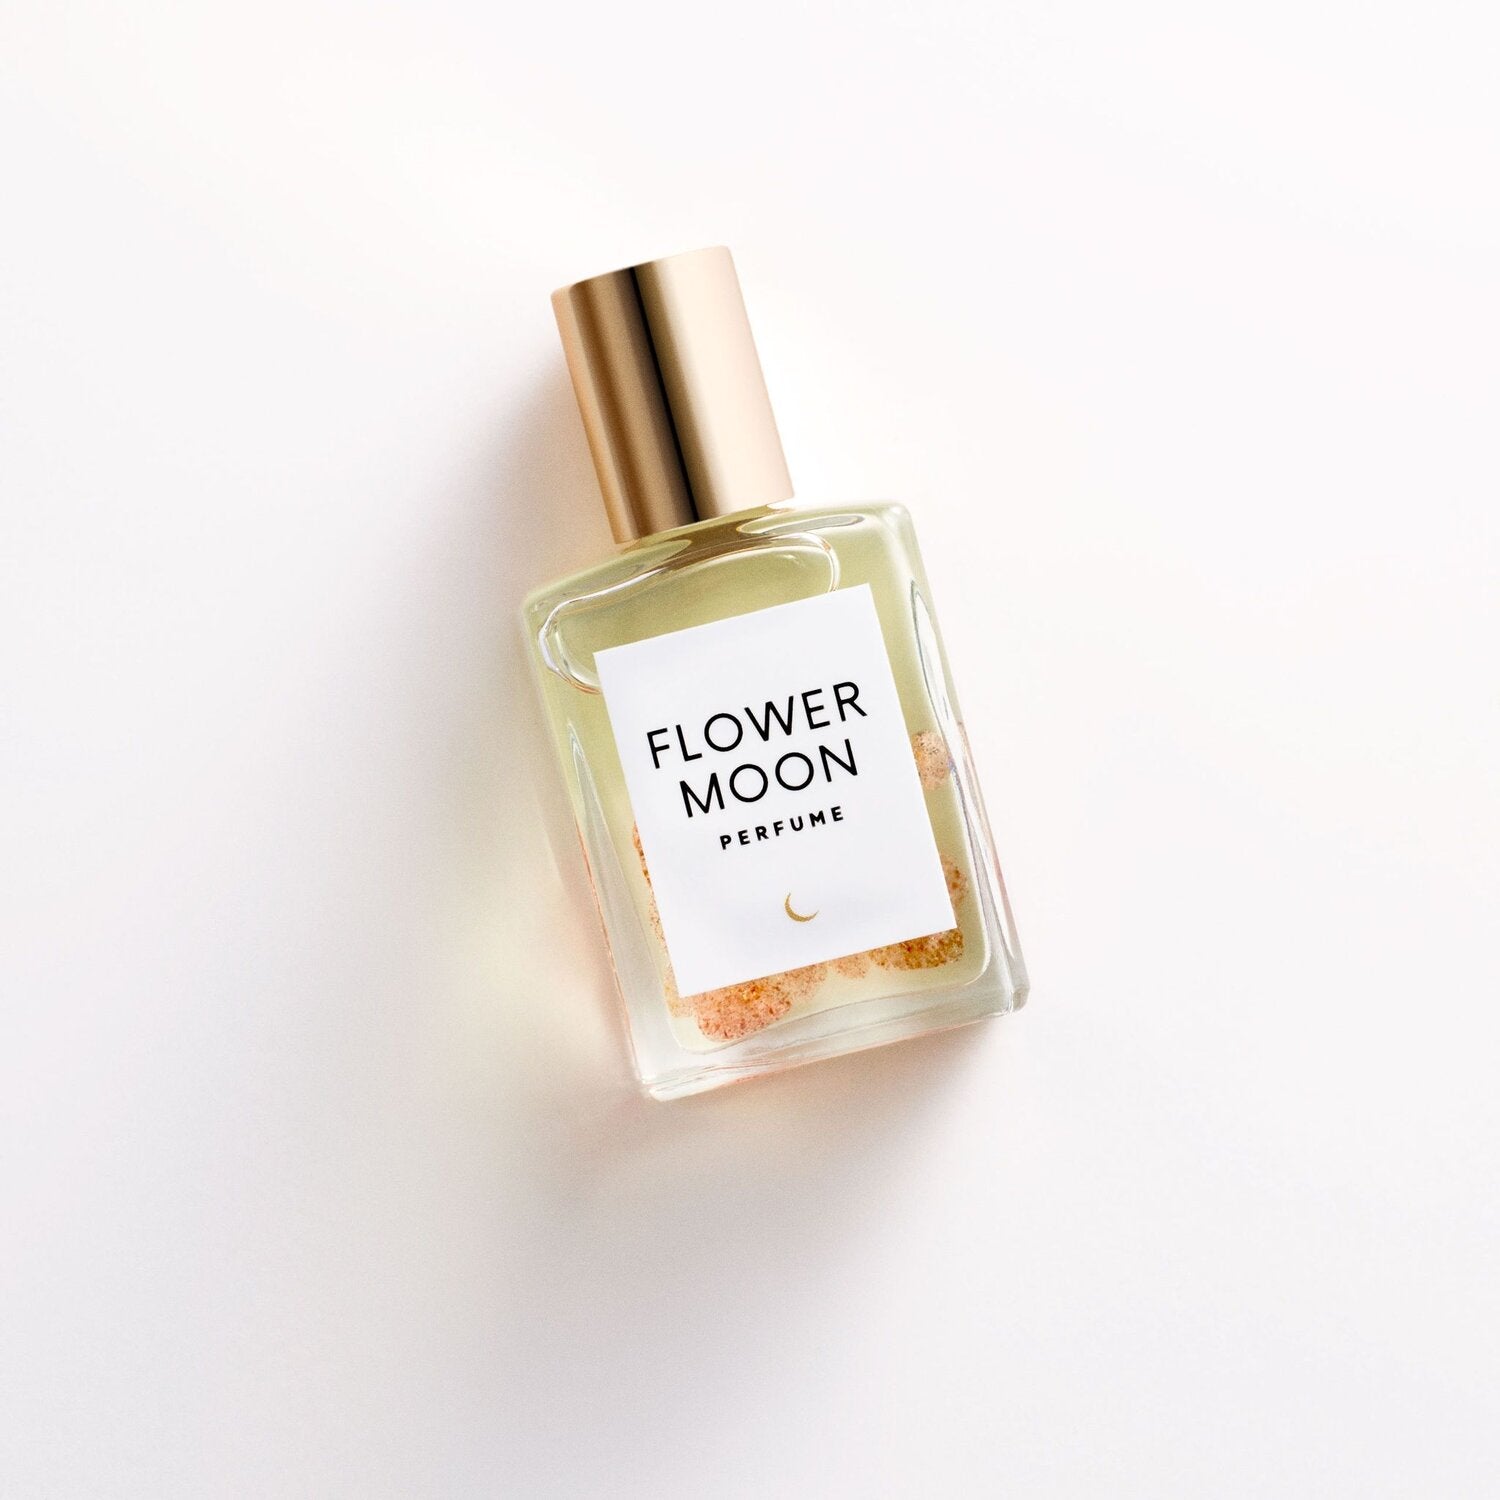 Flower Moon Perfume